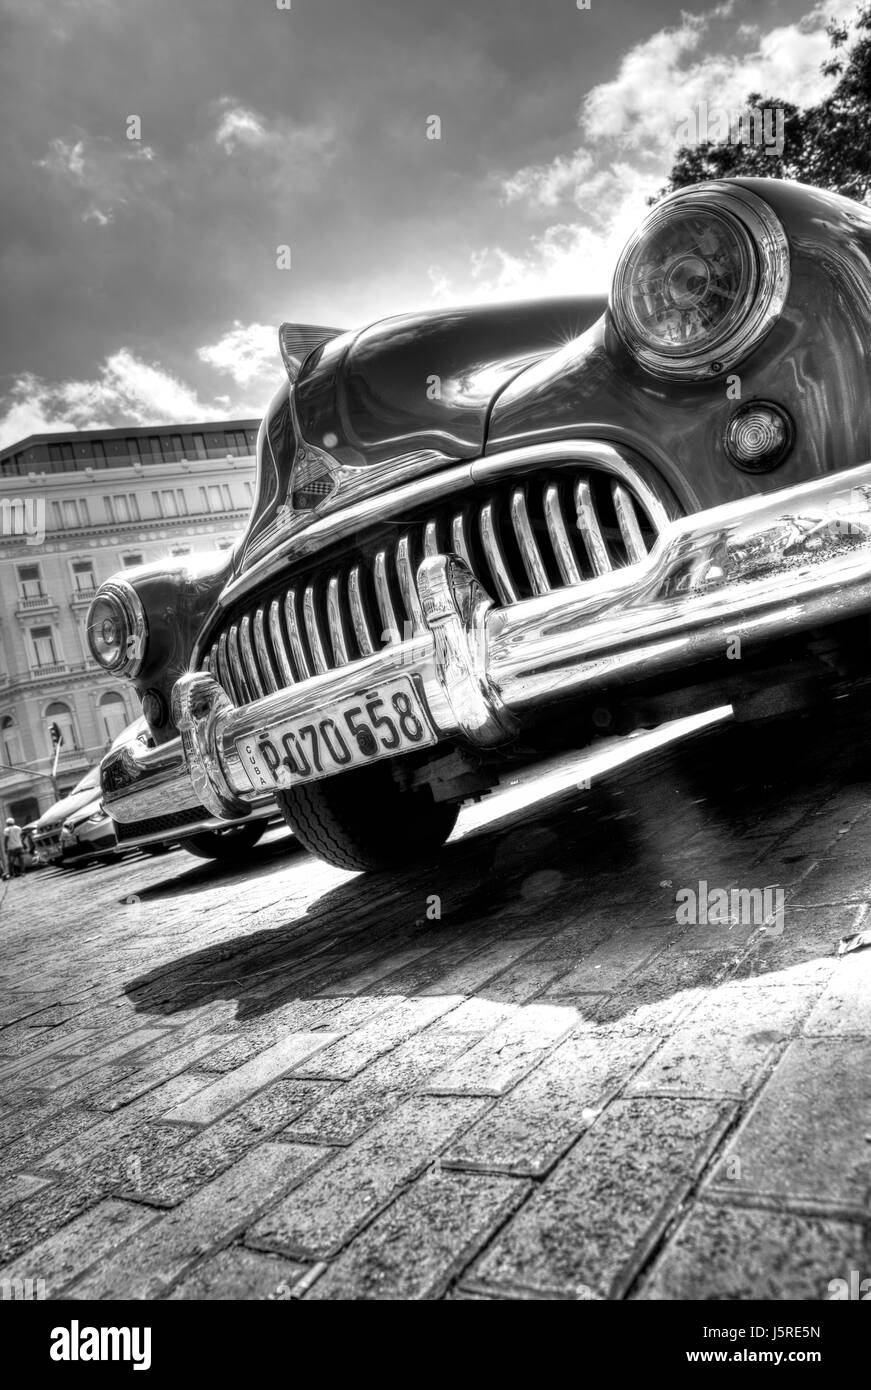 Old American car in Cuba, Cuban car, typical cuban car Cuban vehicle, automobile in Cuba, Car Cuba, Cuban Car, Havana car, parked, typical, blue Stock Photo